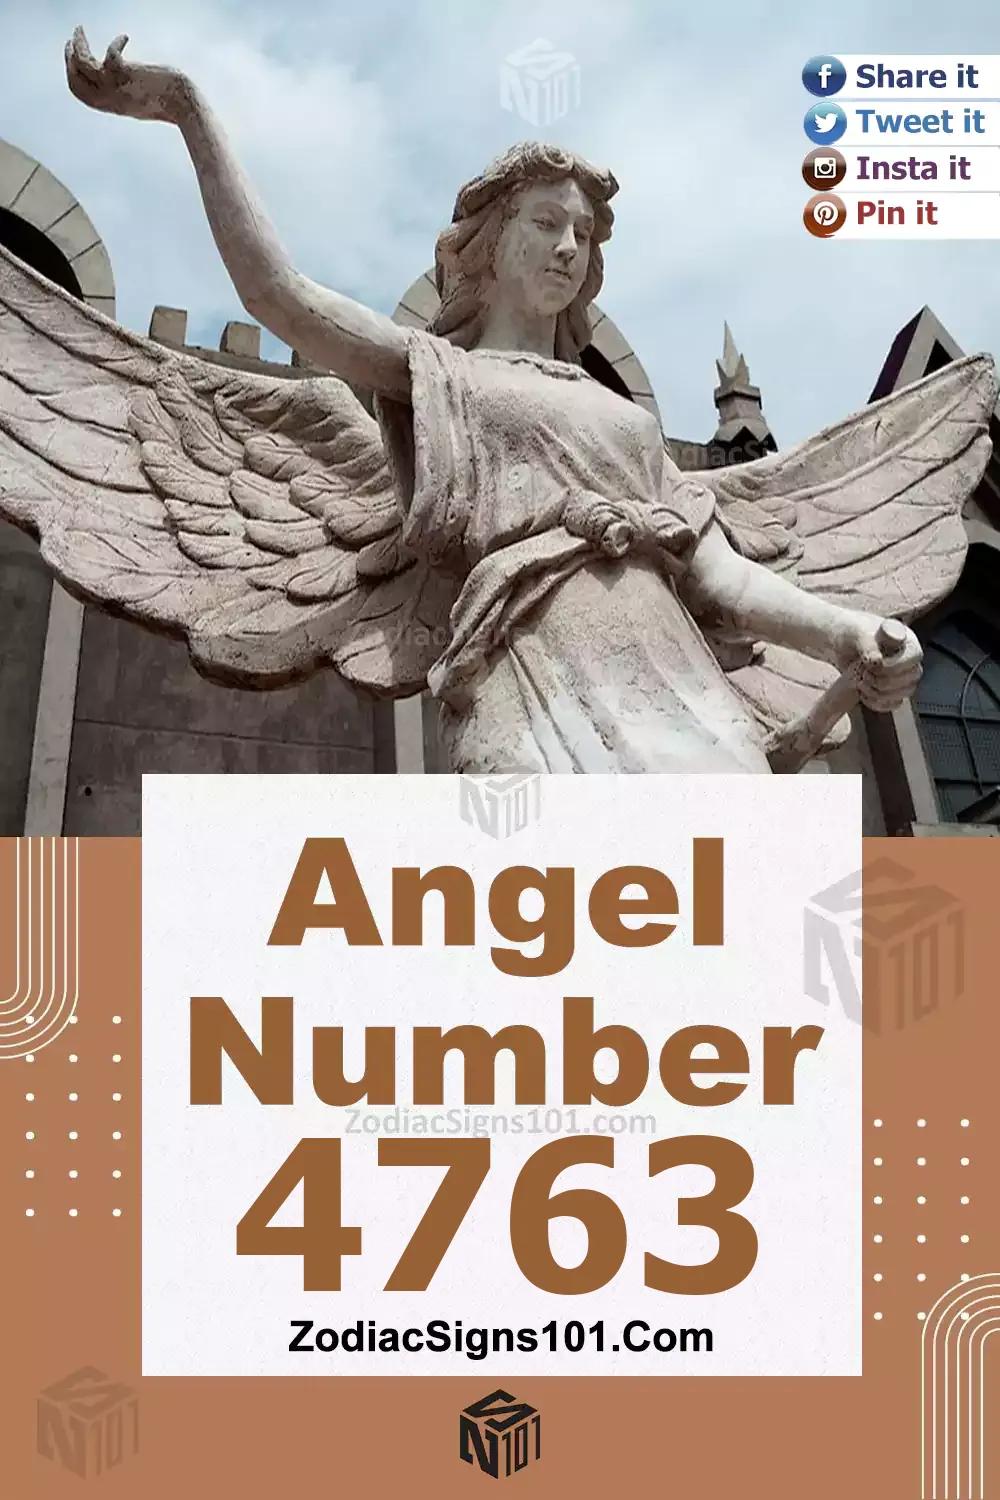 4763-Angel-Number-Meaning.jpg